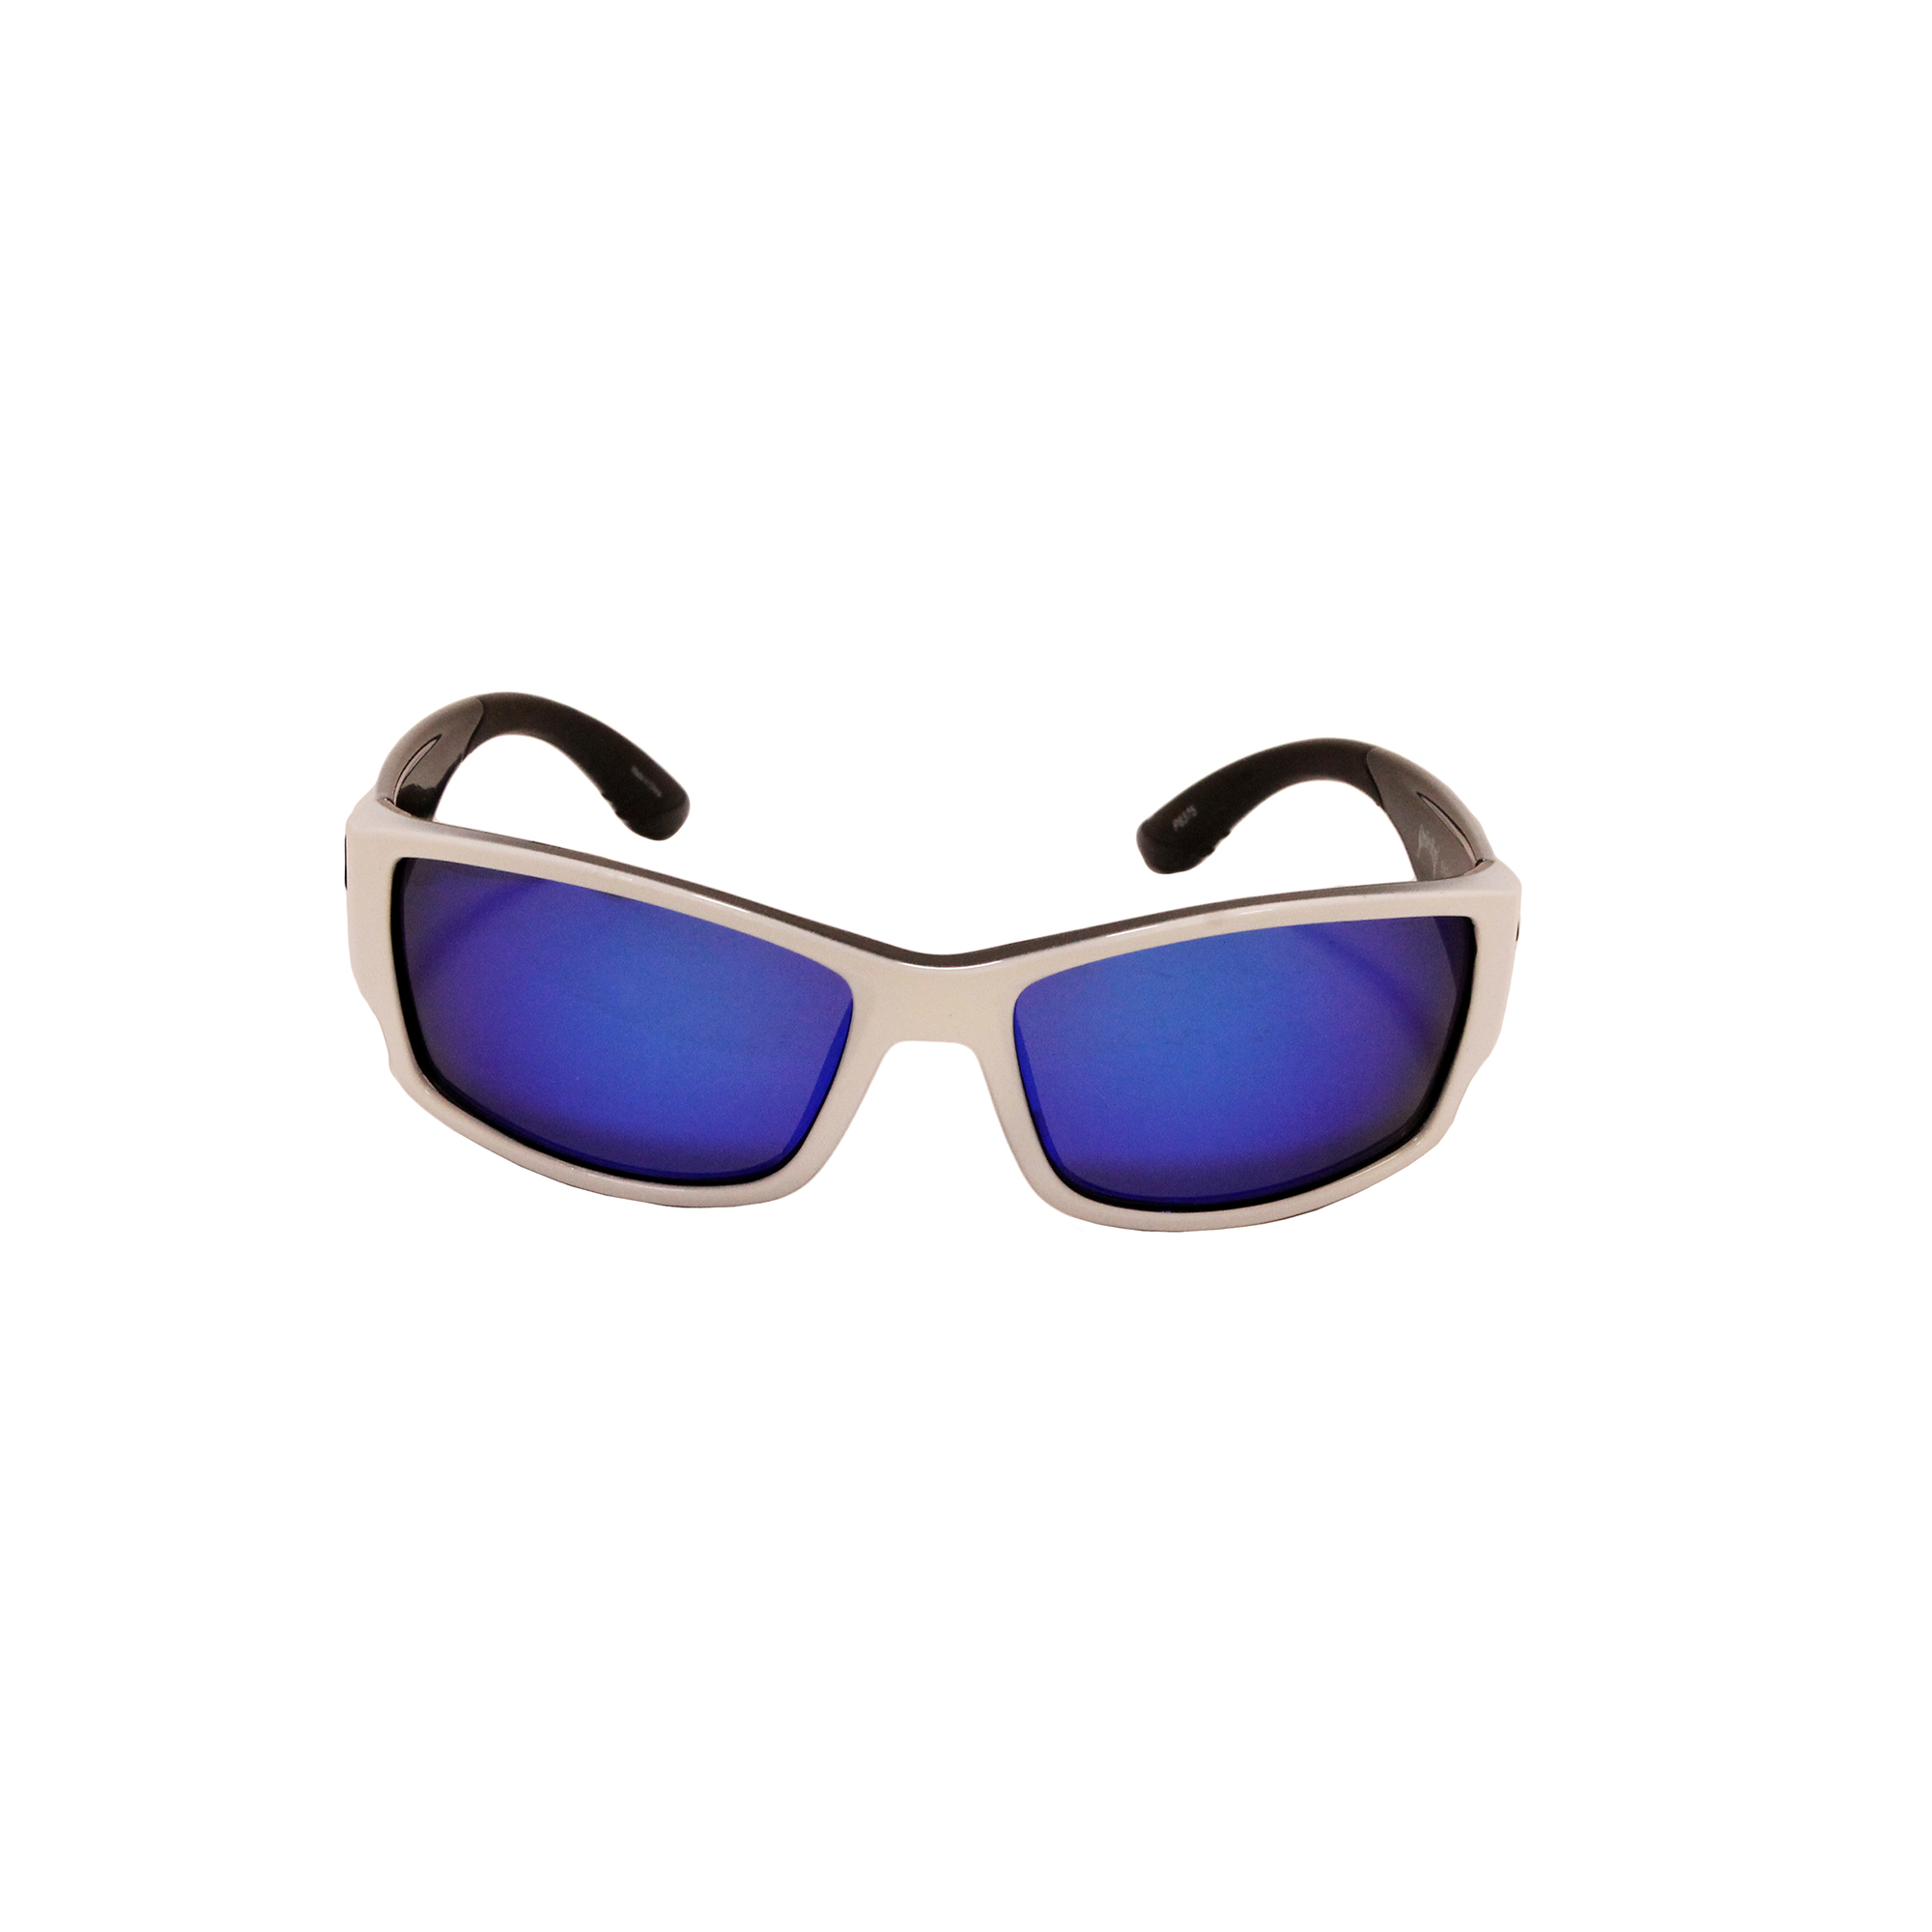 Strike King SKP Ouachita Shiny Wht Blu Mirror Gry Sunglasses